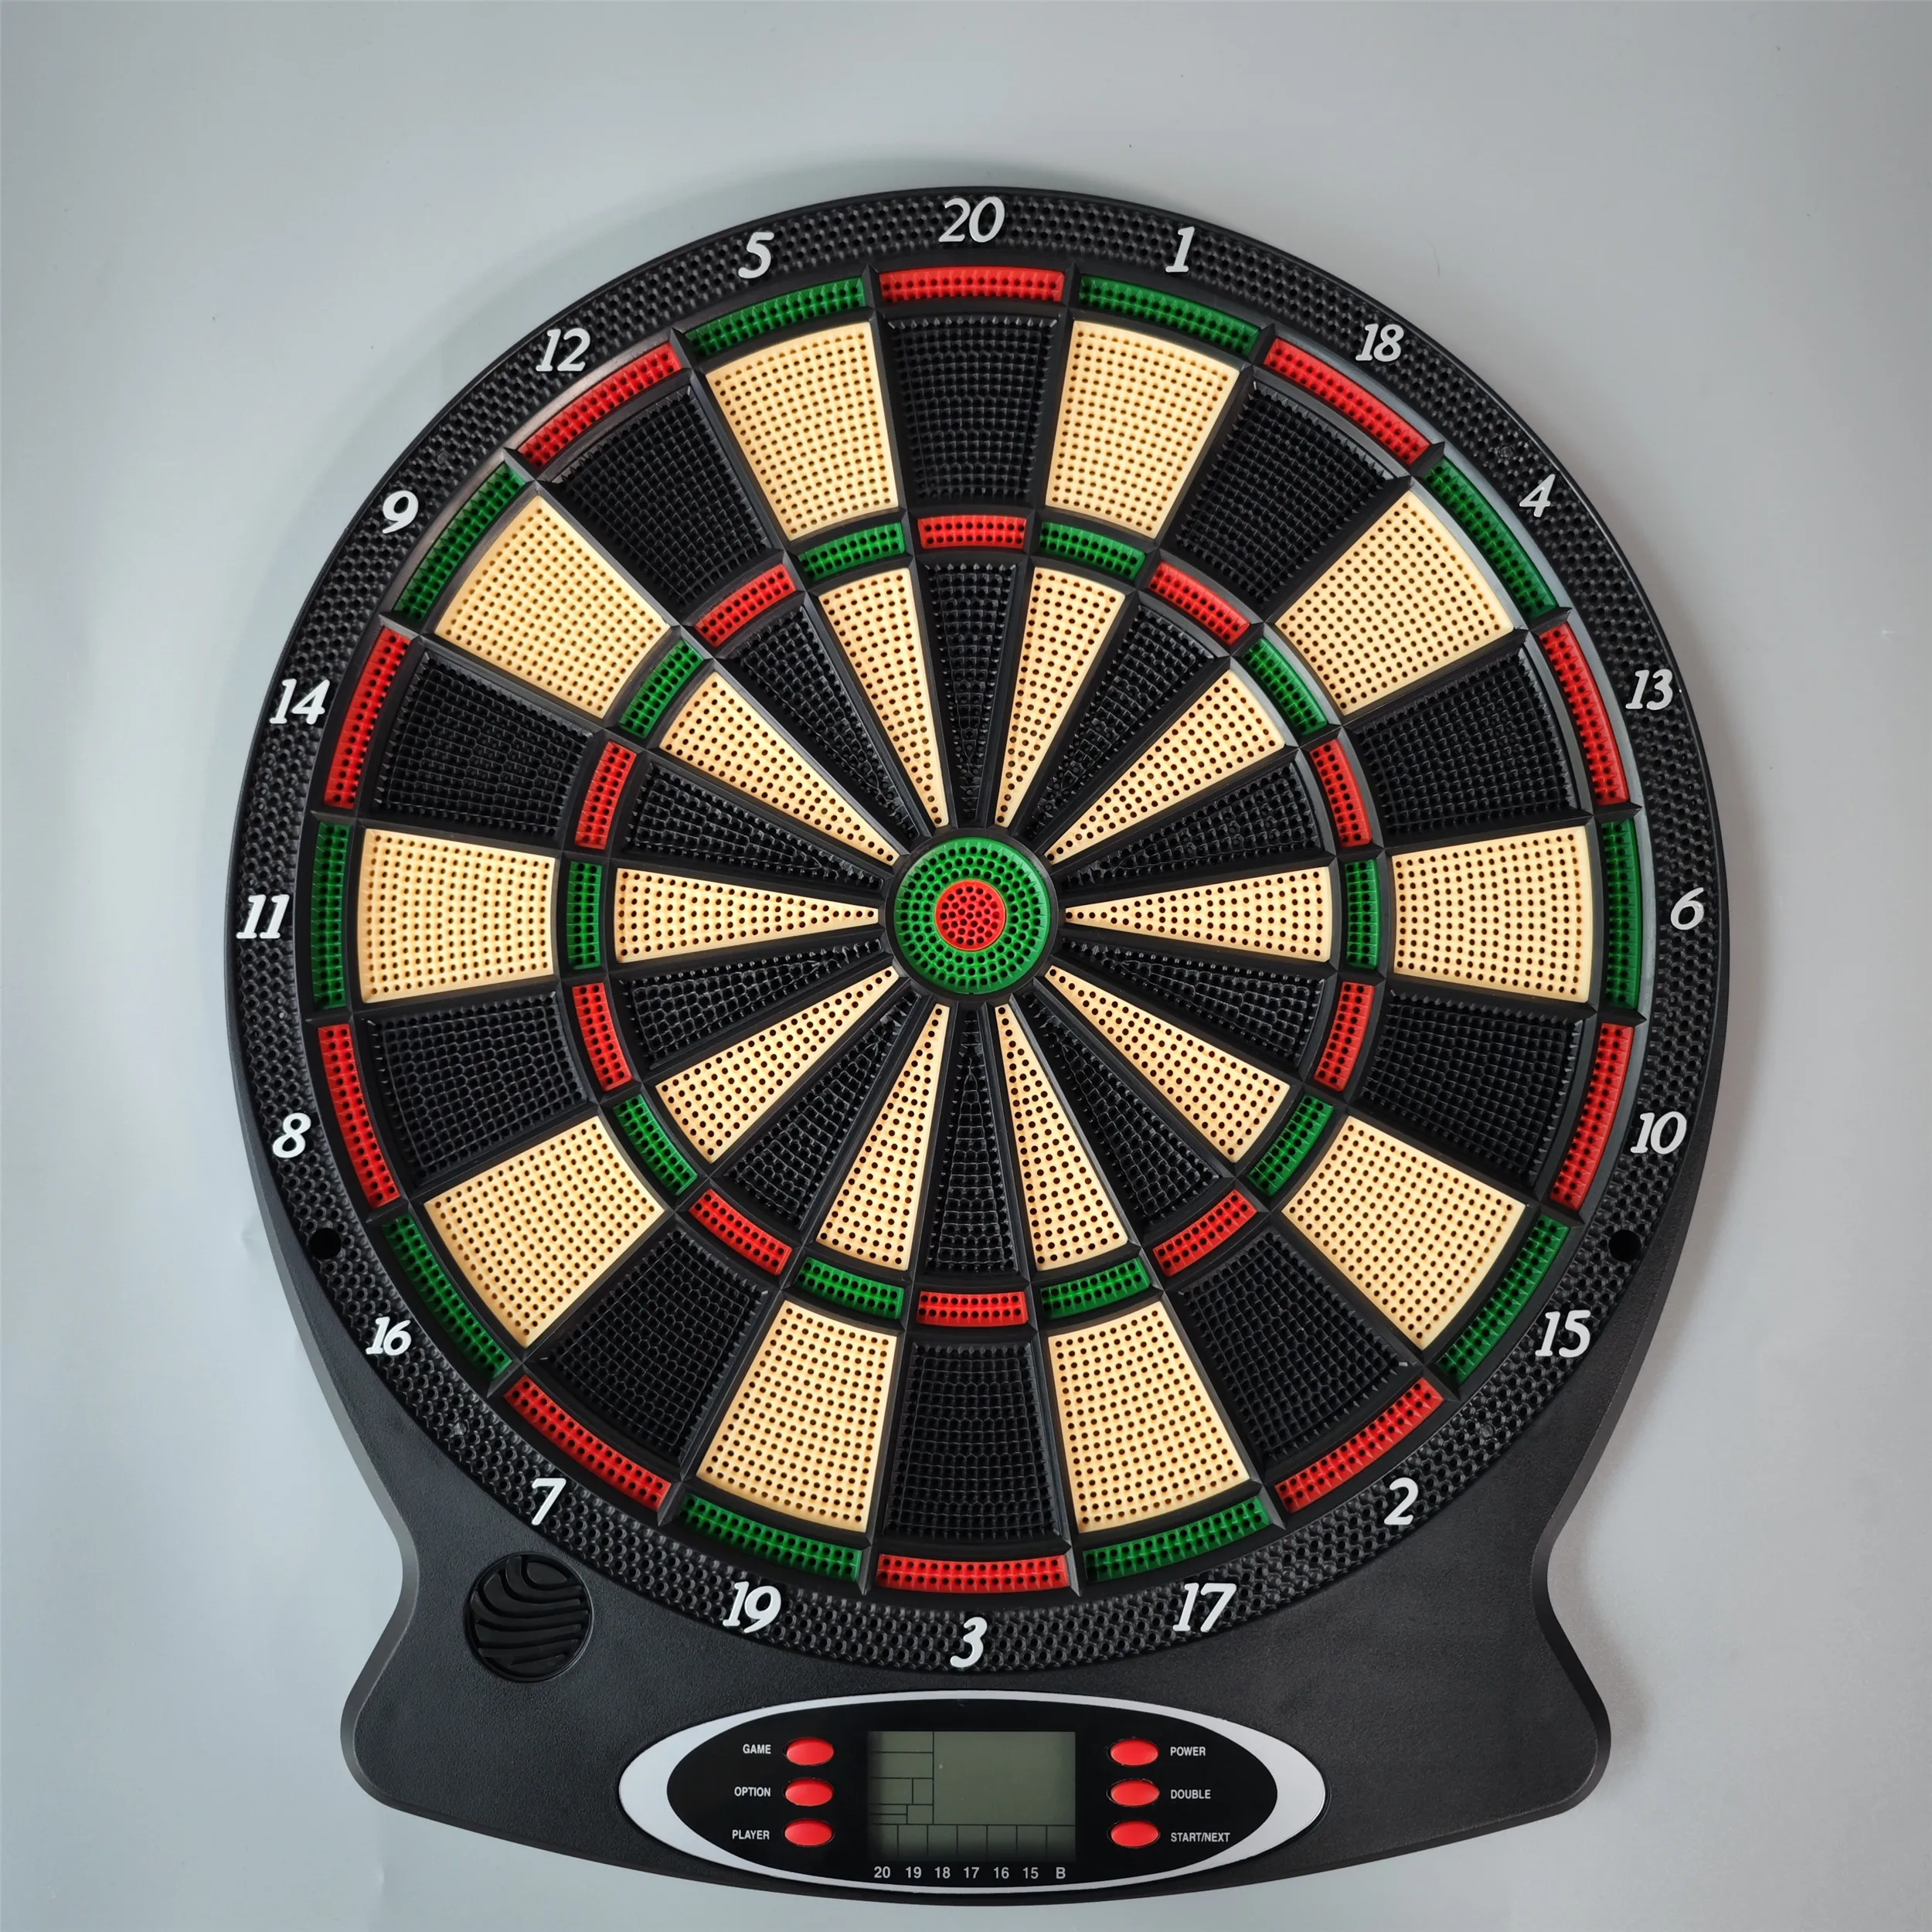 Roux stuk composiet Electronic Dart Board For Indoor Outdoor Games And Sports - Buy Dart  Board,Electronic Dartboard,Dart Product on Alibaba.com